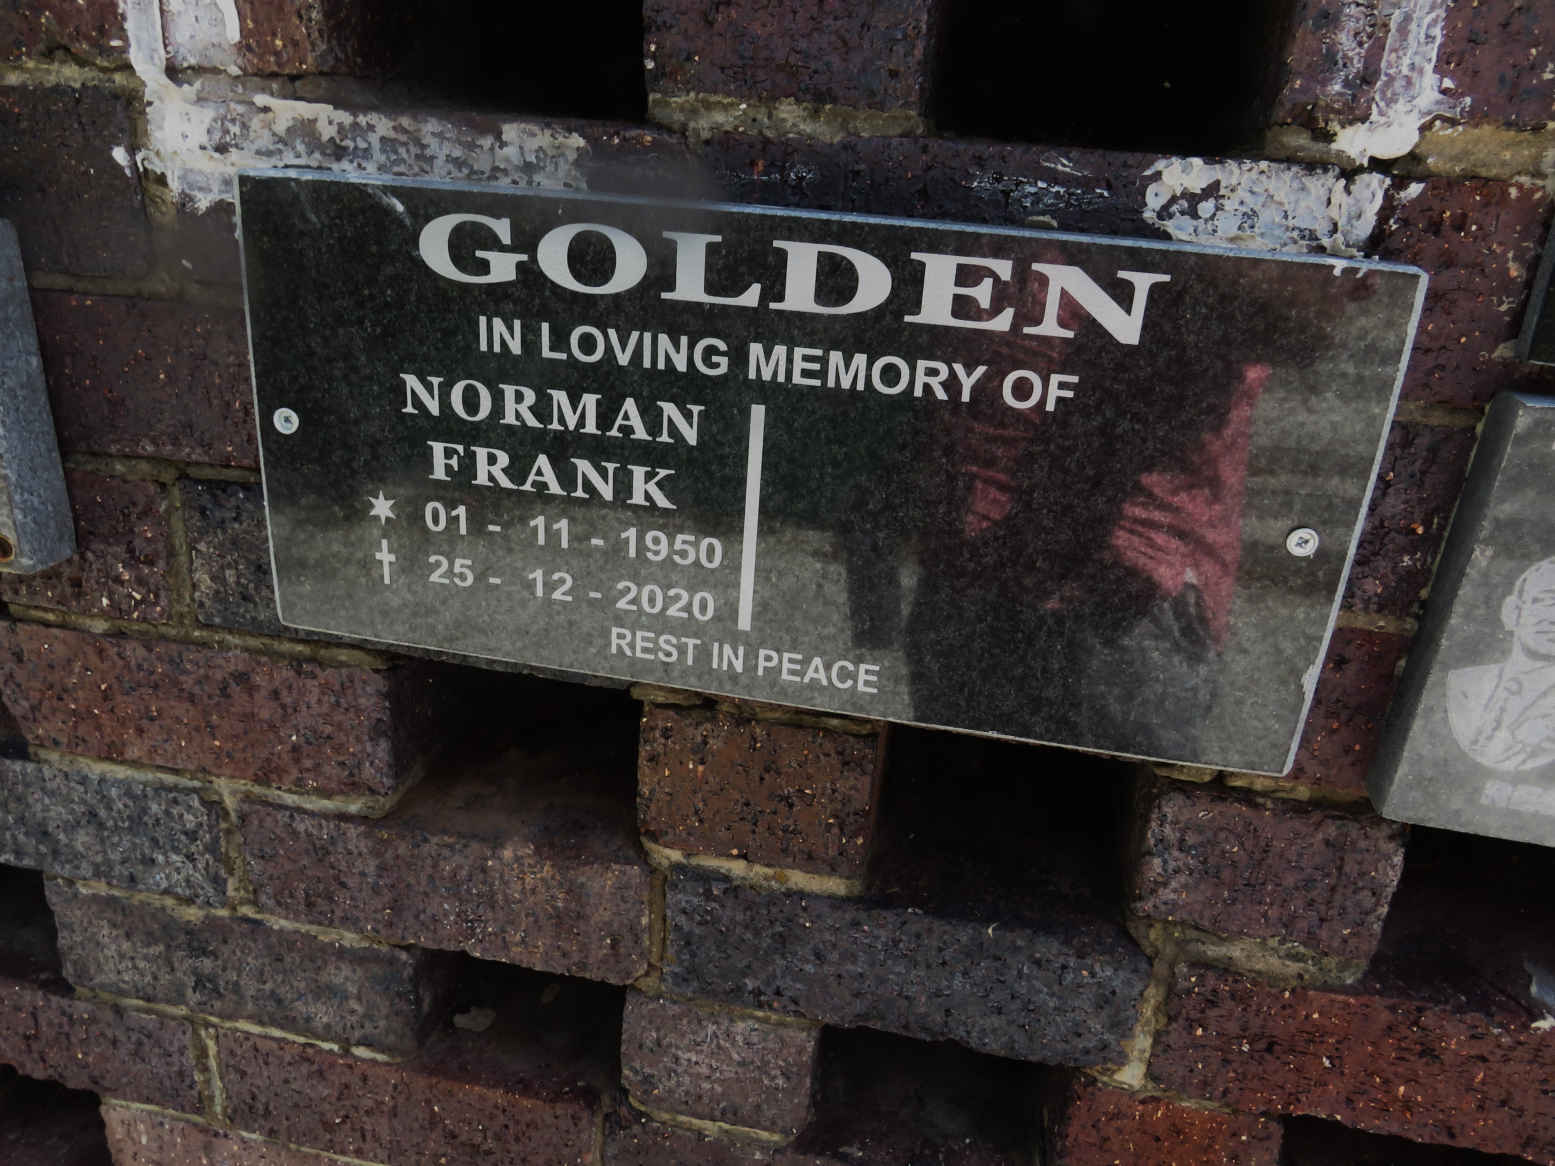 GOLDEN Norman Frank 1950-2020